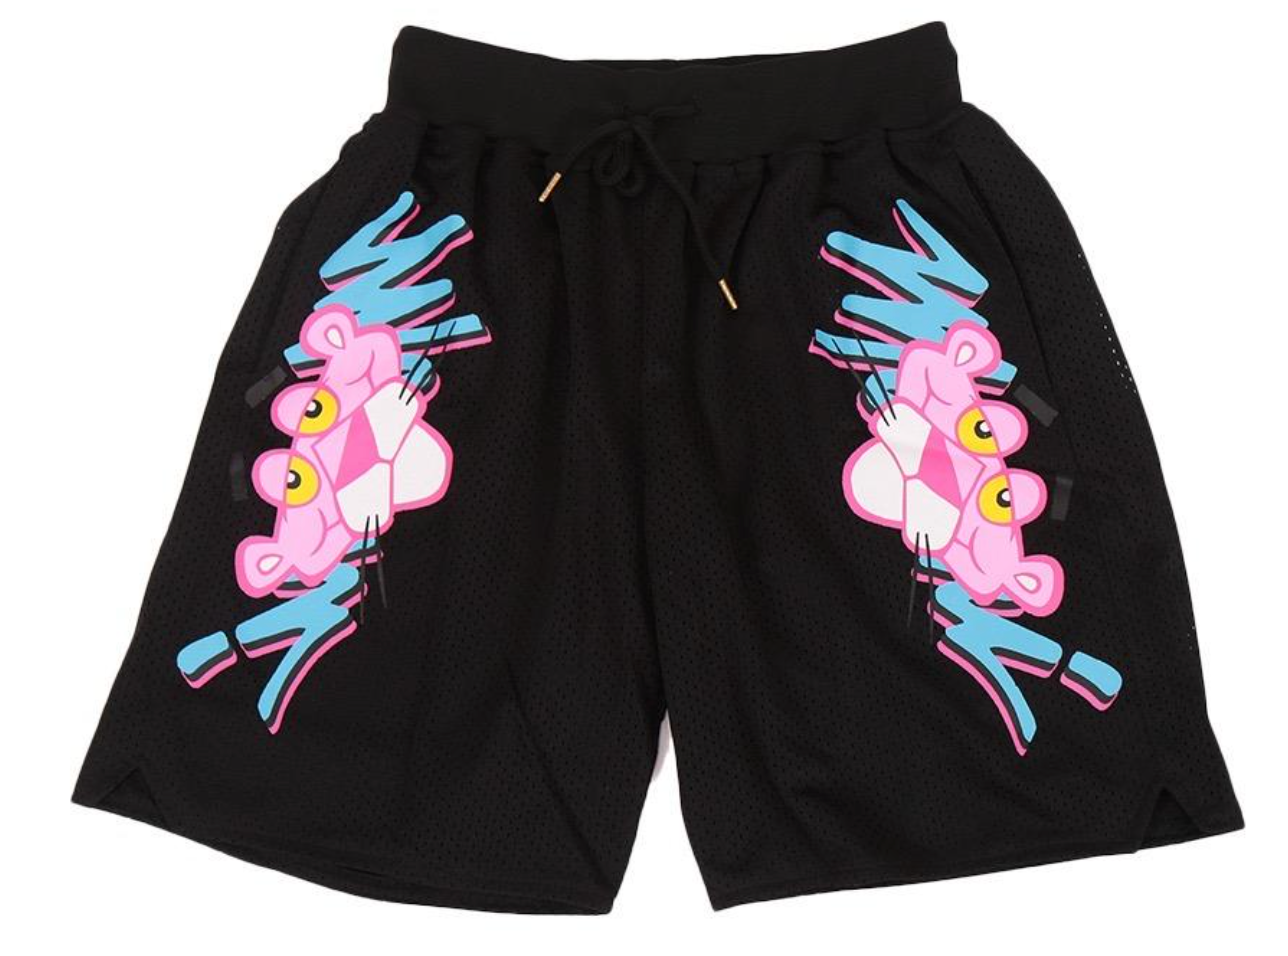 Pink Panther X Basketball Shorts